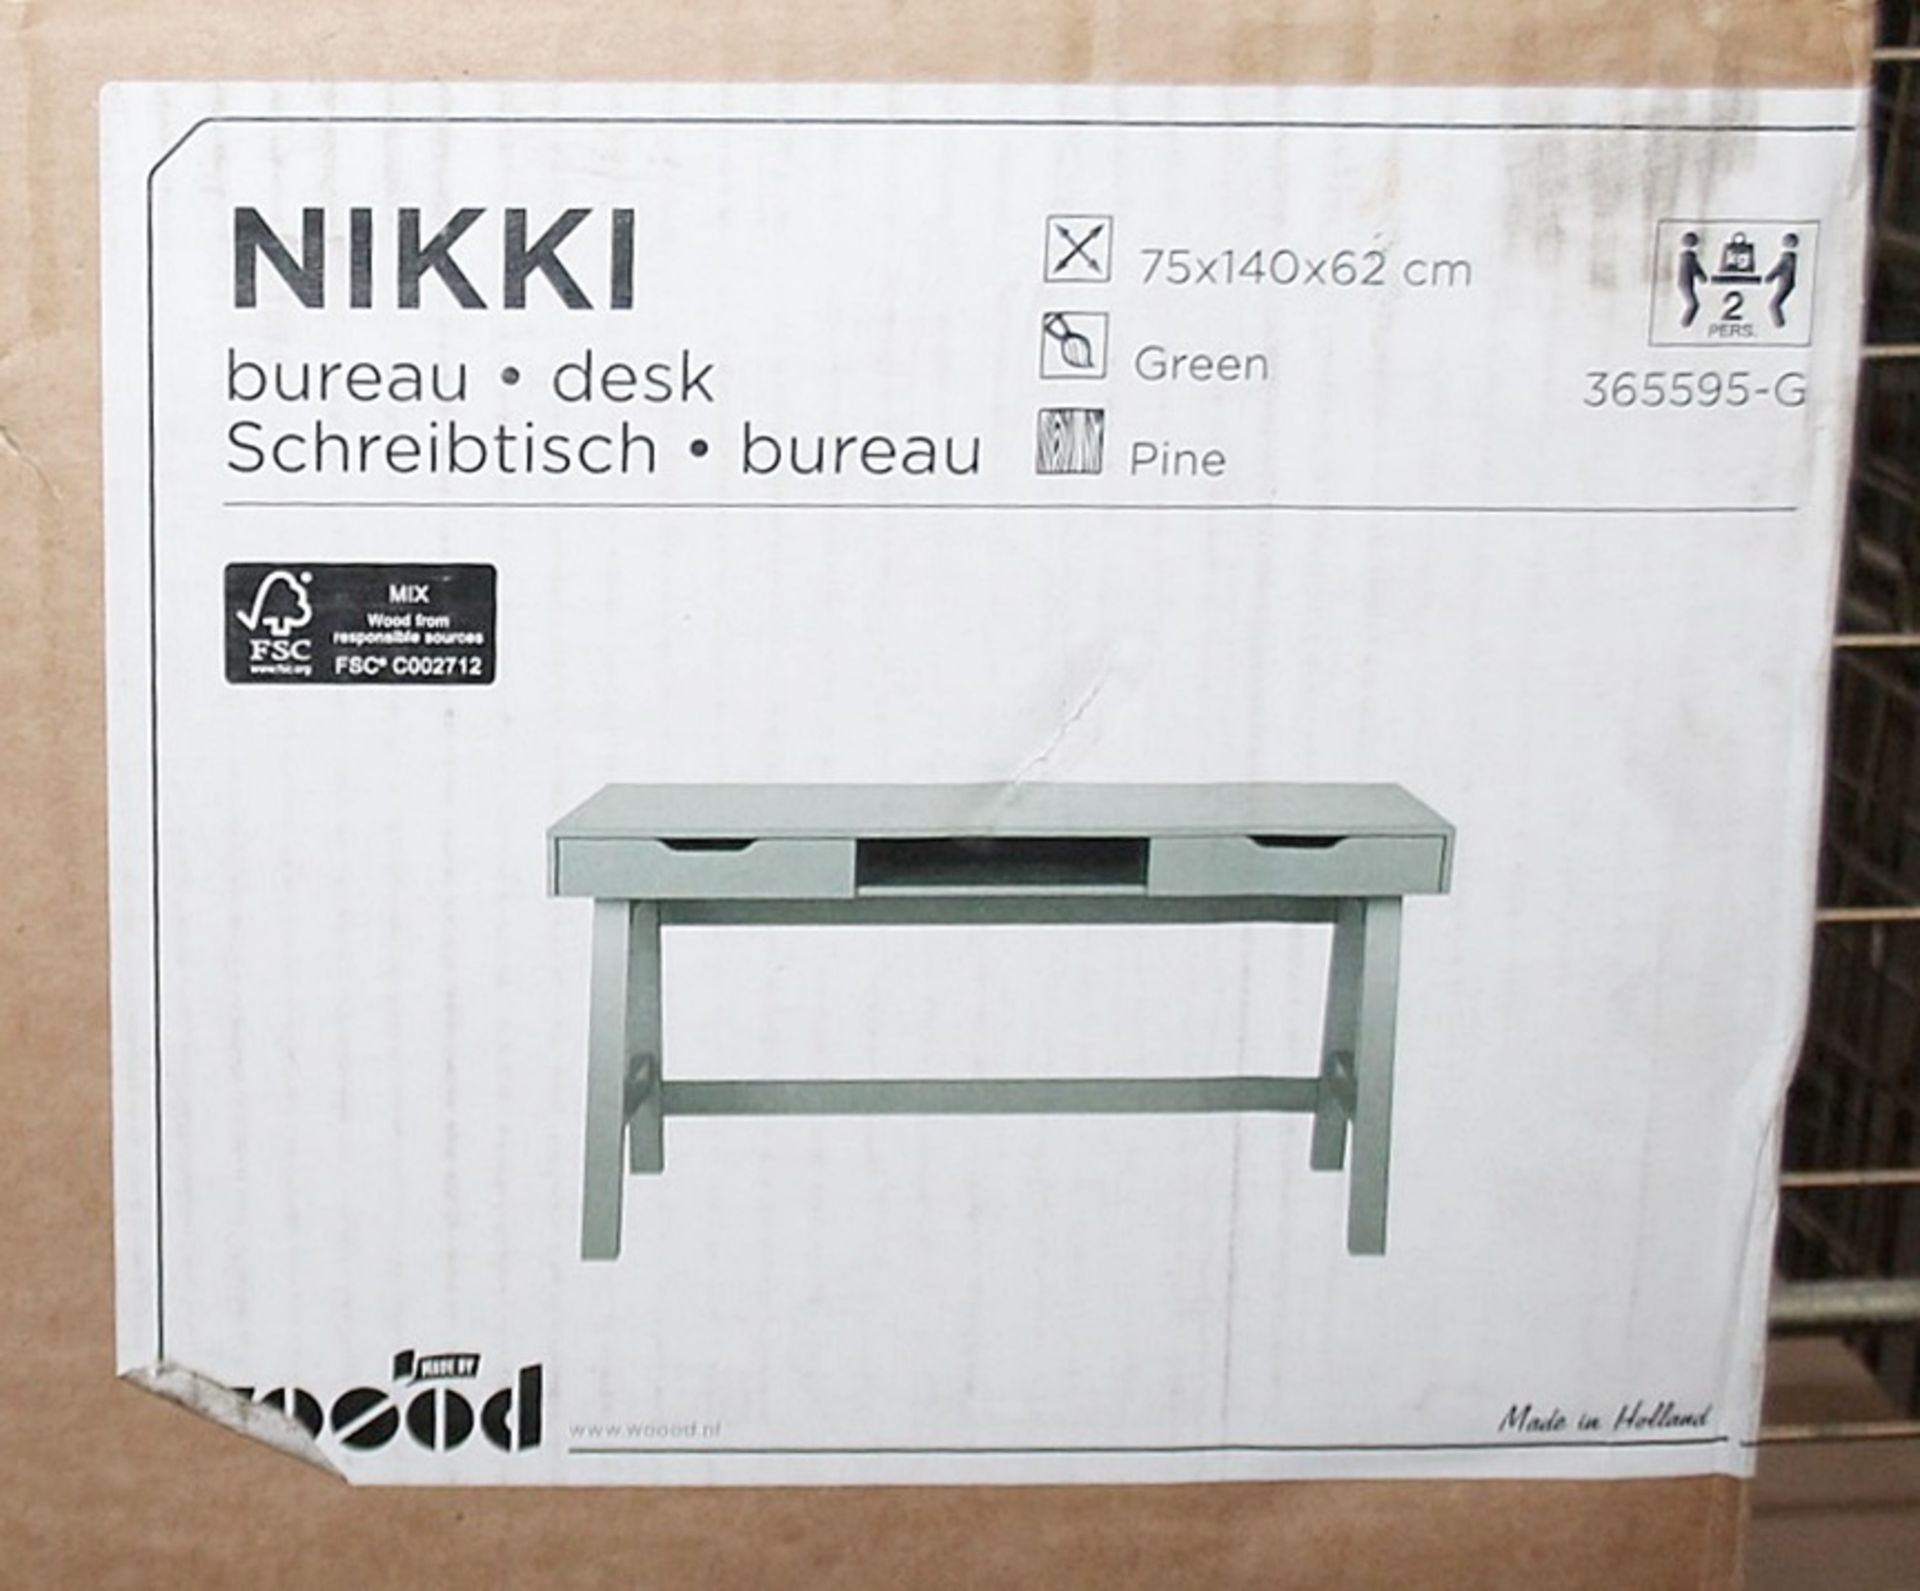 1 x WOOOD 'Nikki' Desk In Pale Sage Green - Original Price £385.00 - Made In Holland - Sealed - Image 5 of 5